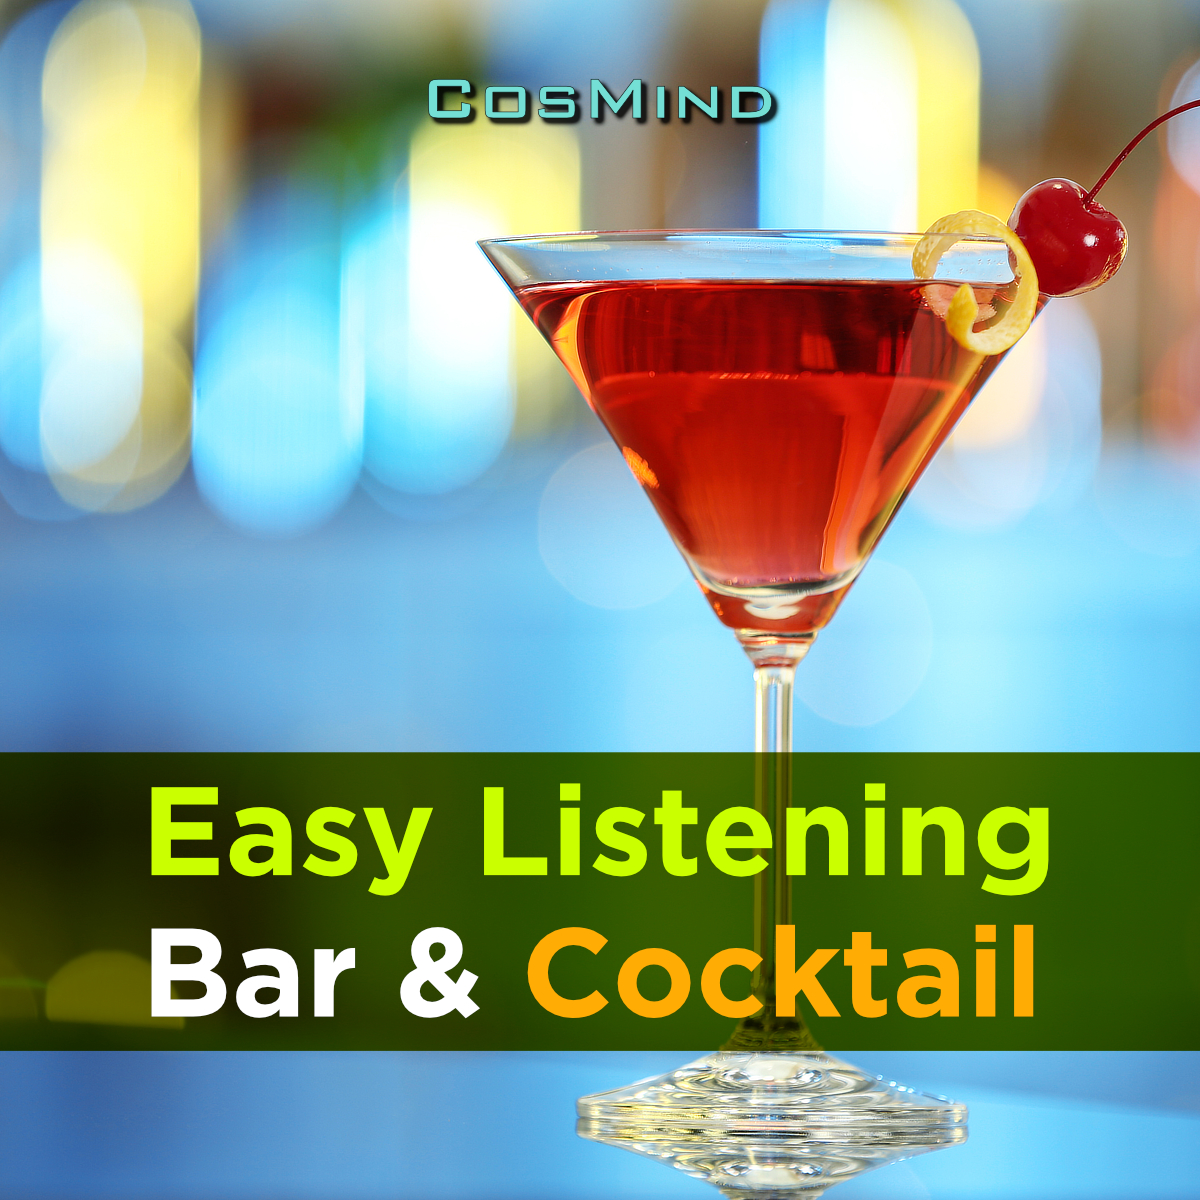 Easy Listening, Bar & Cocktail